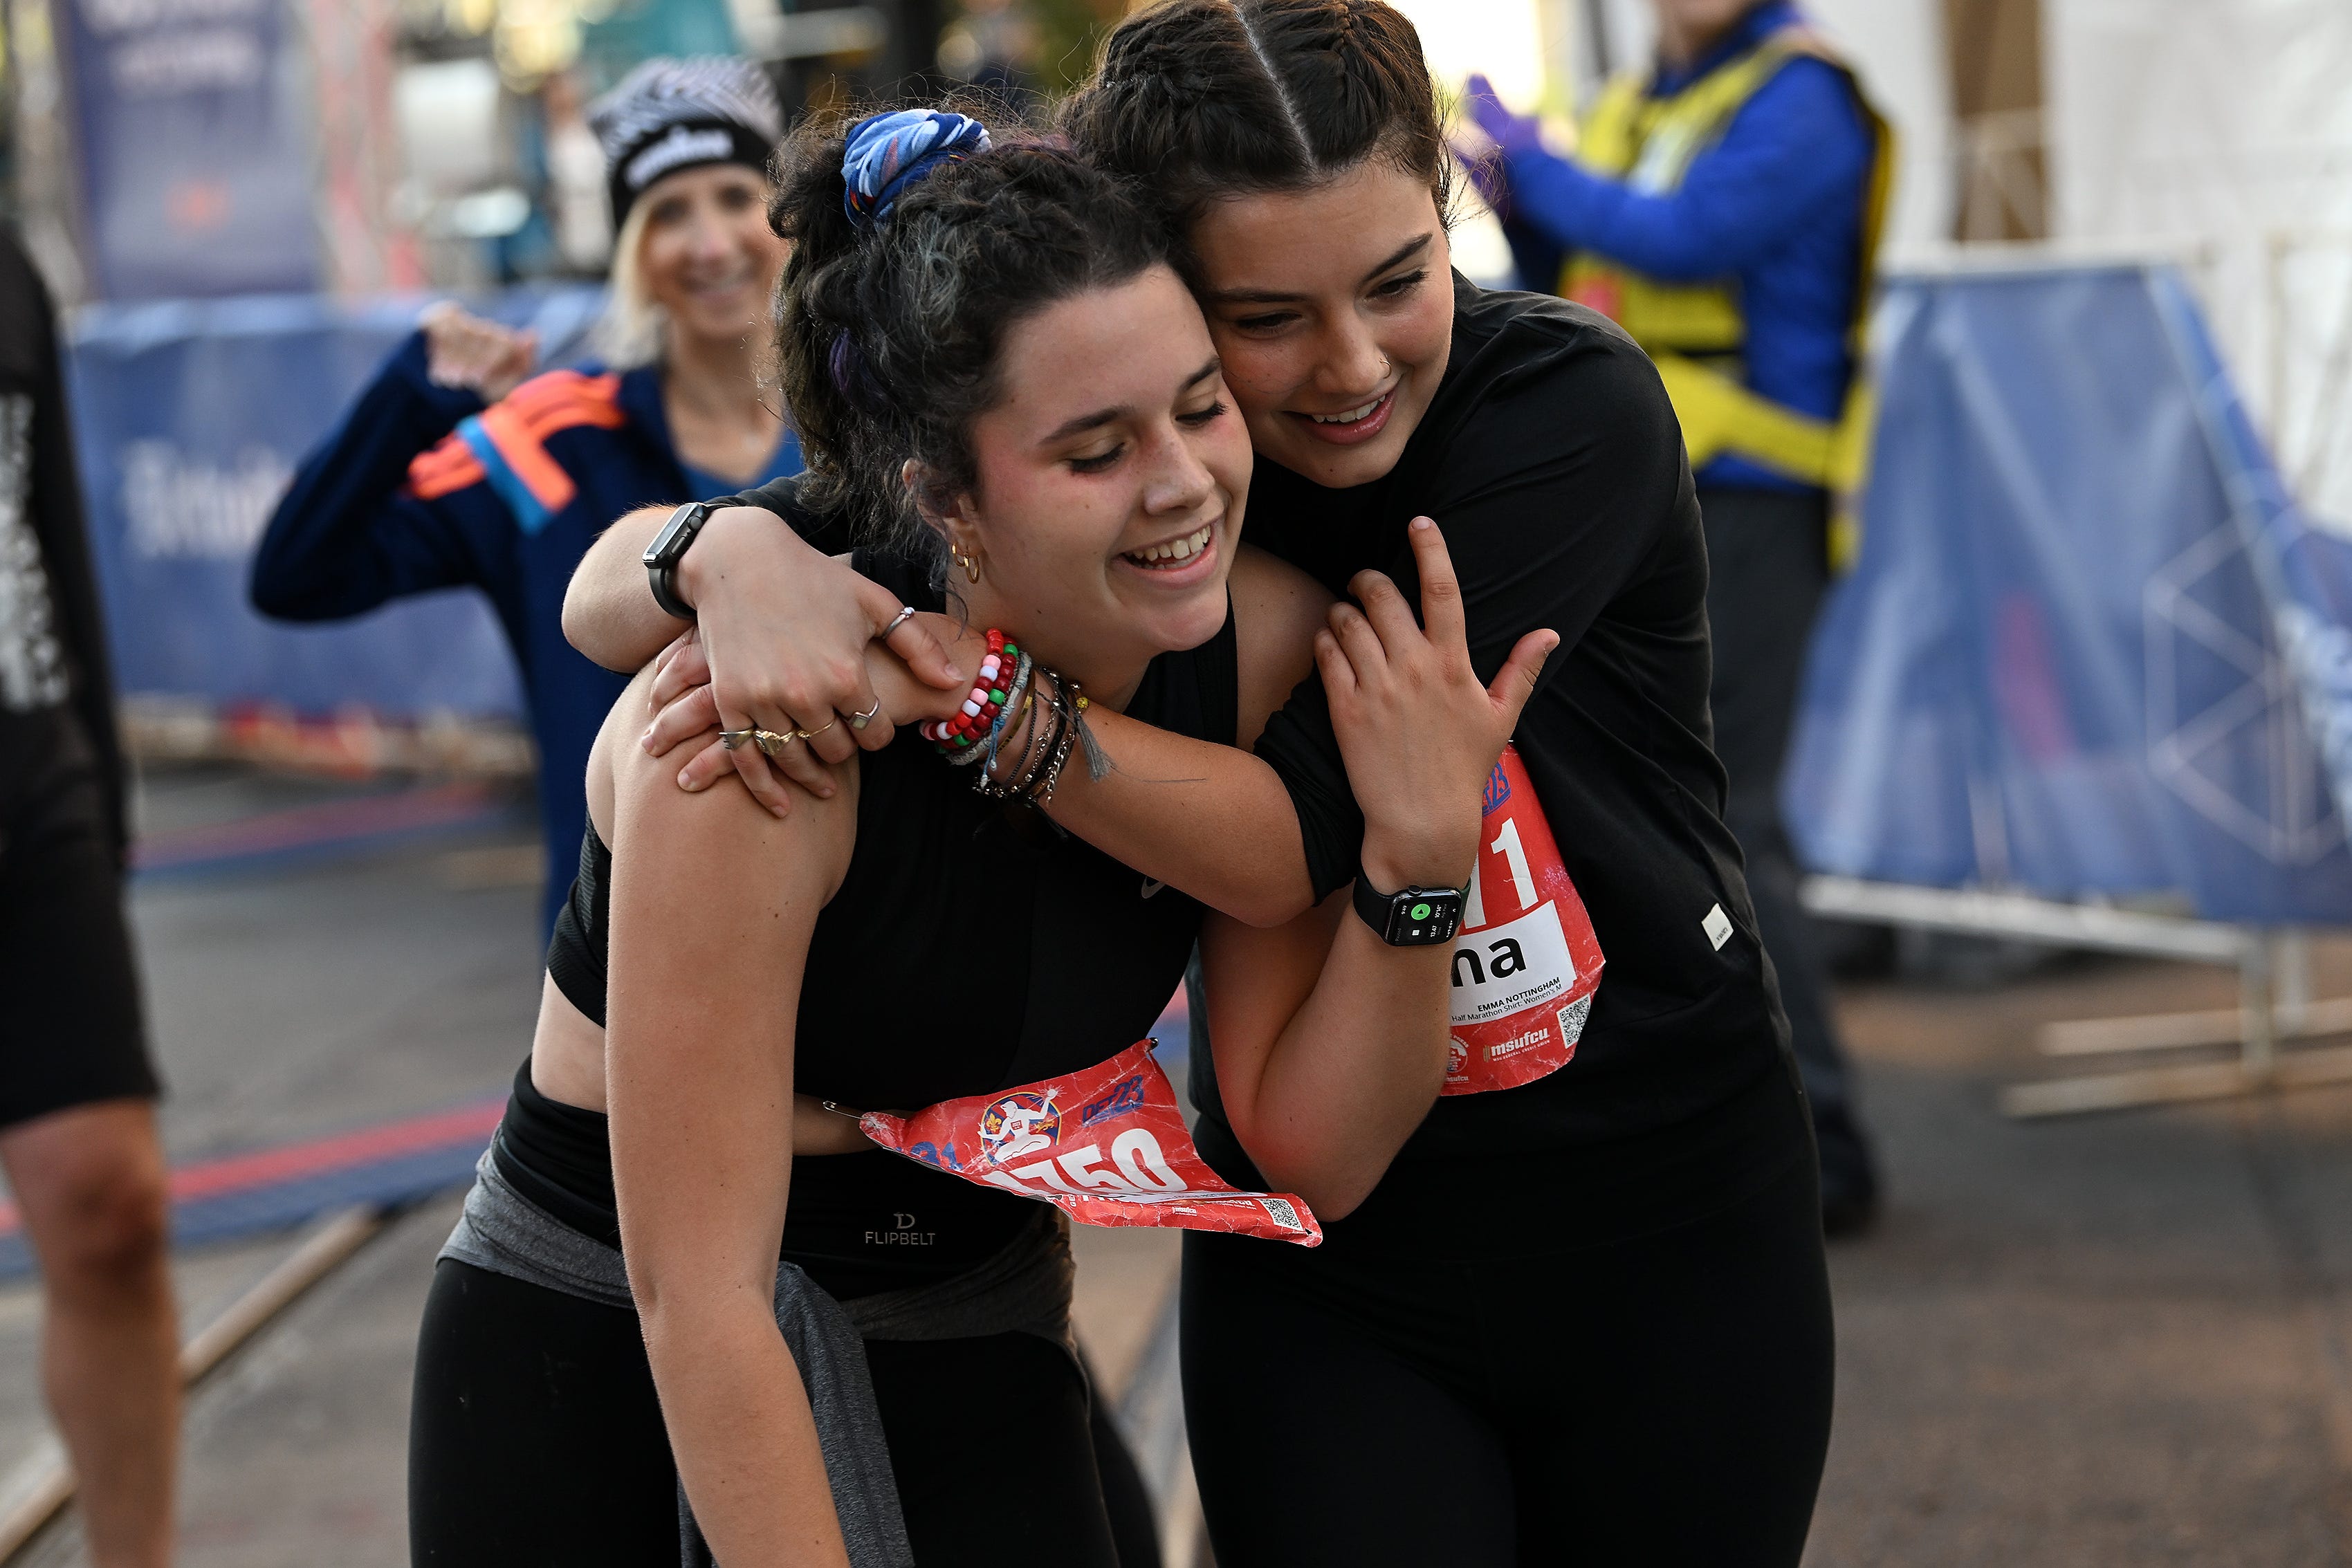 From left, Jennifer Diemert, 29, of Clawson and Emma Nottingham, 22, of Missouri react after they finish the half marathon.